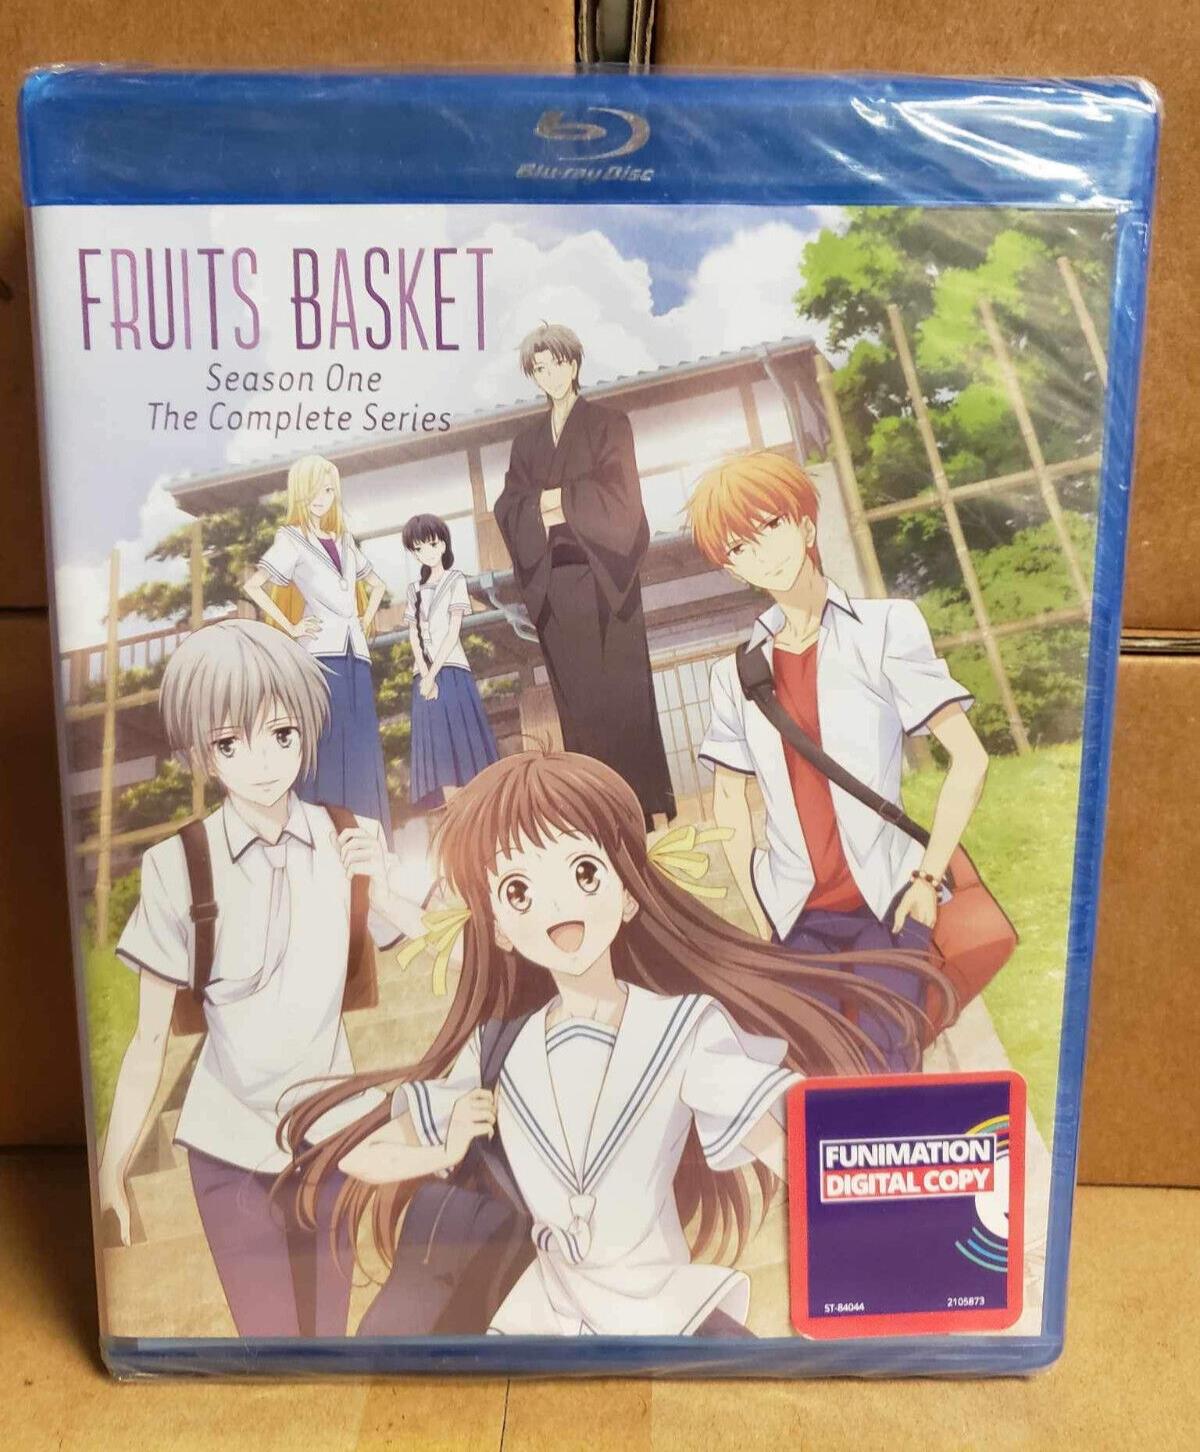 Fruits Basket Complete Season 1 Anime Blu-ray + Digital Copy NEW!